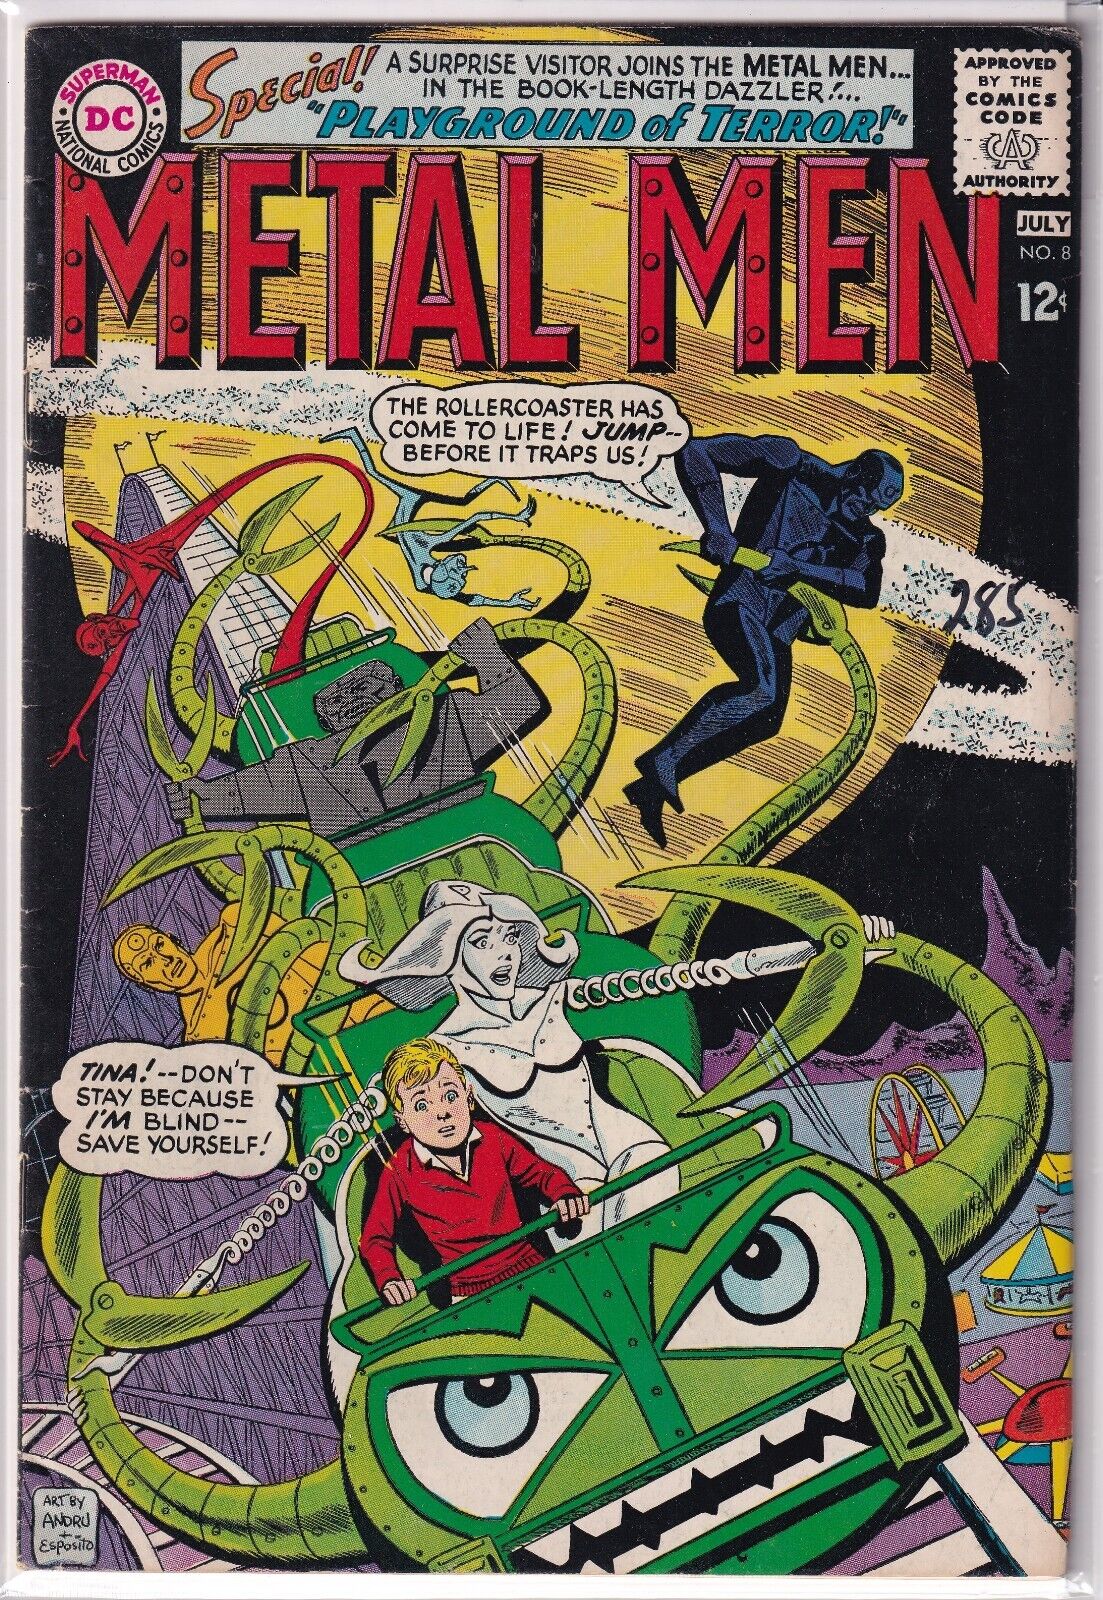 20916: DC Comics METAL MEN #8 Fine Plus Grade